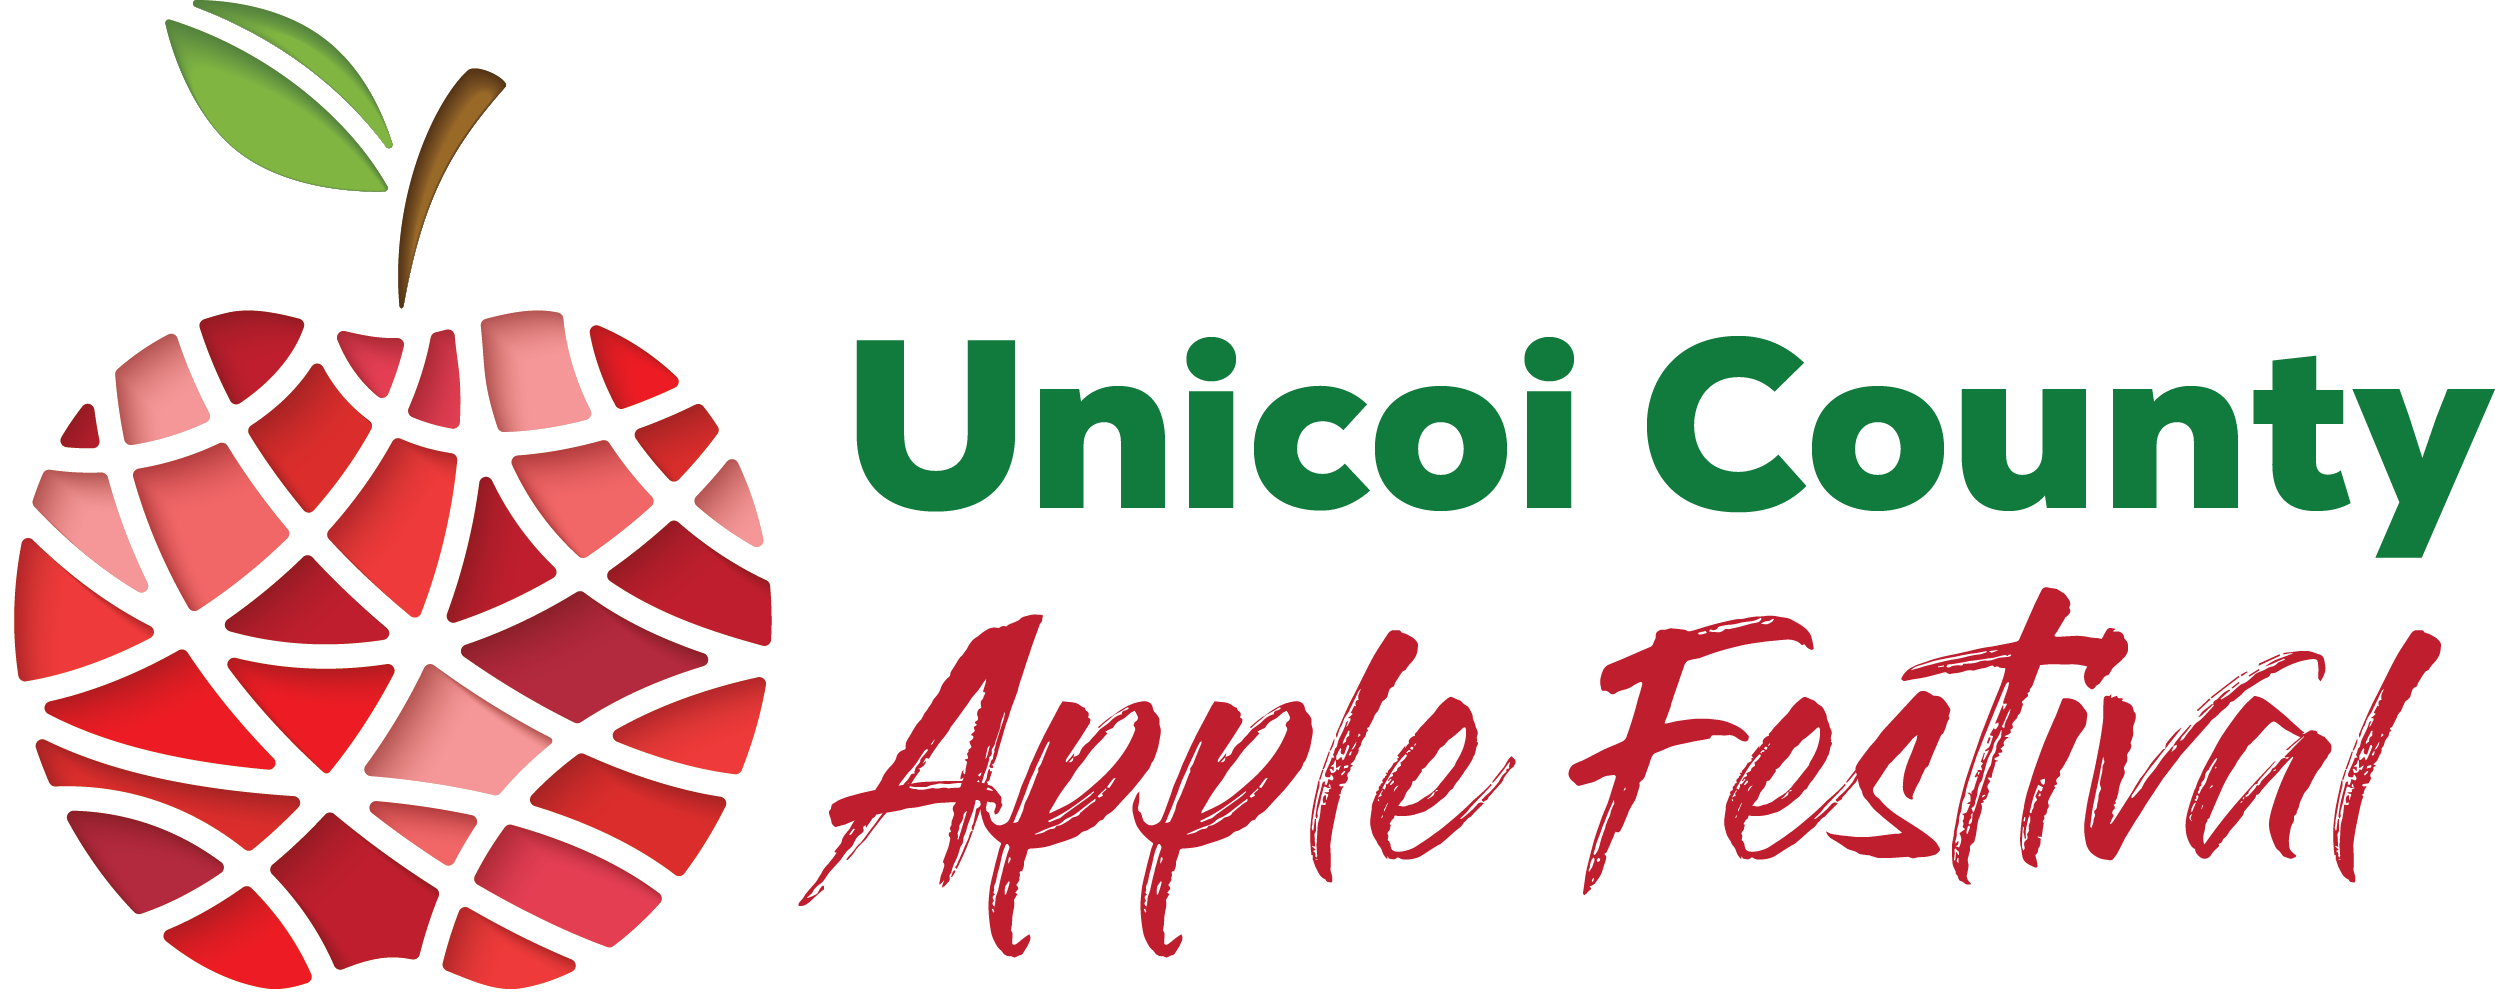 Unicoi County Apple Festival